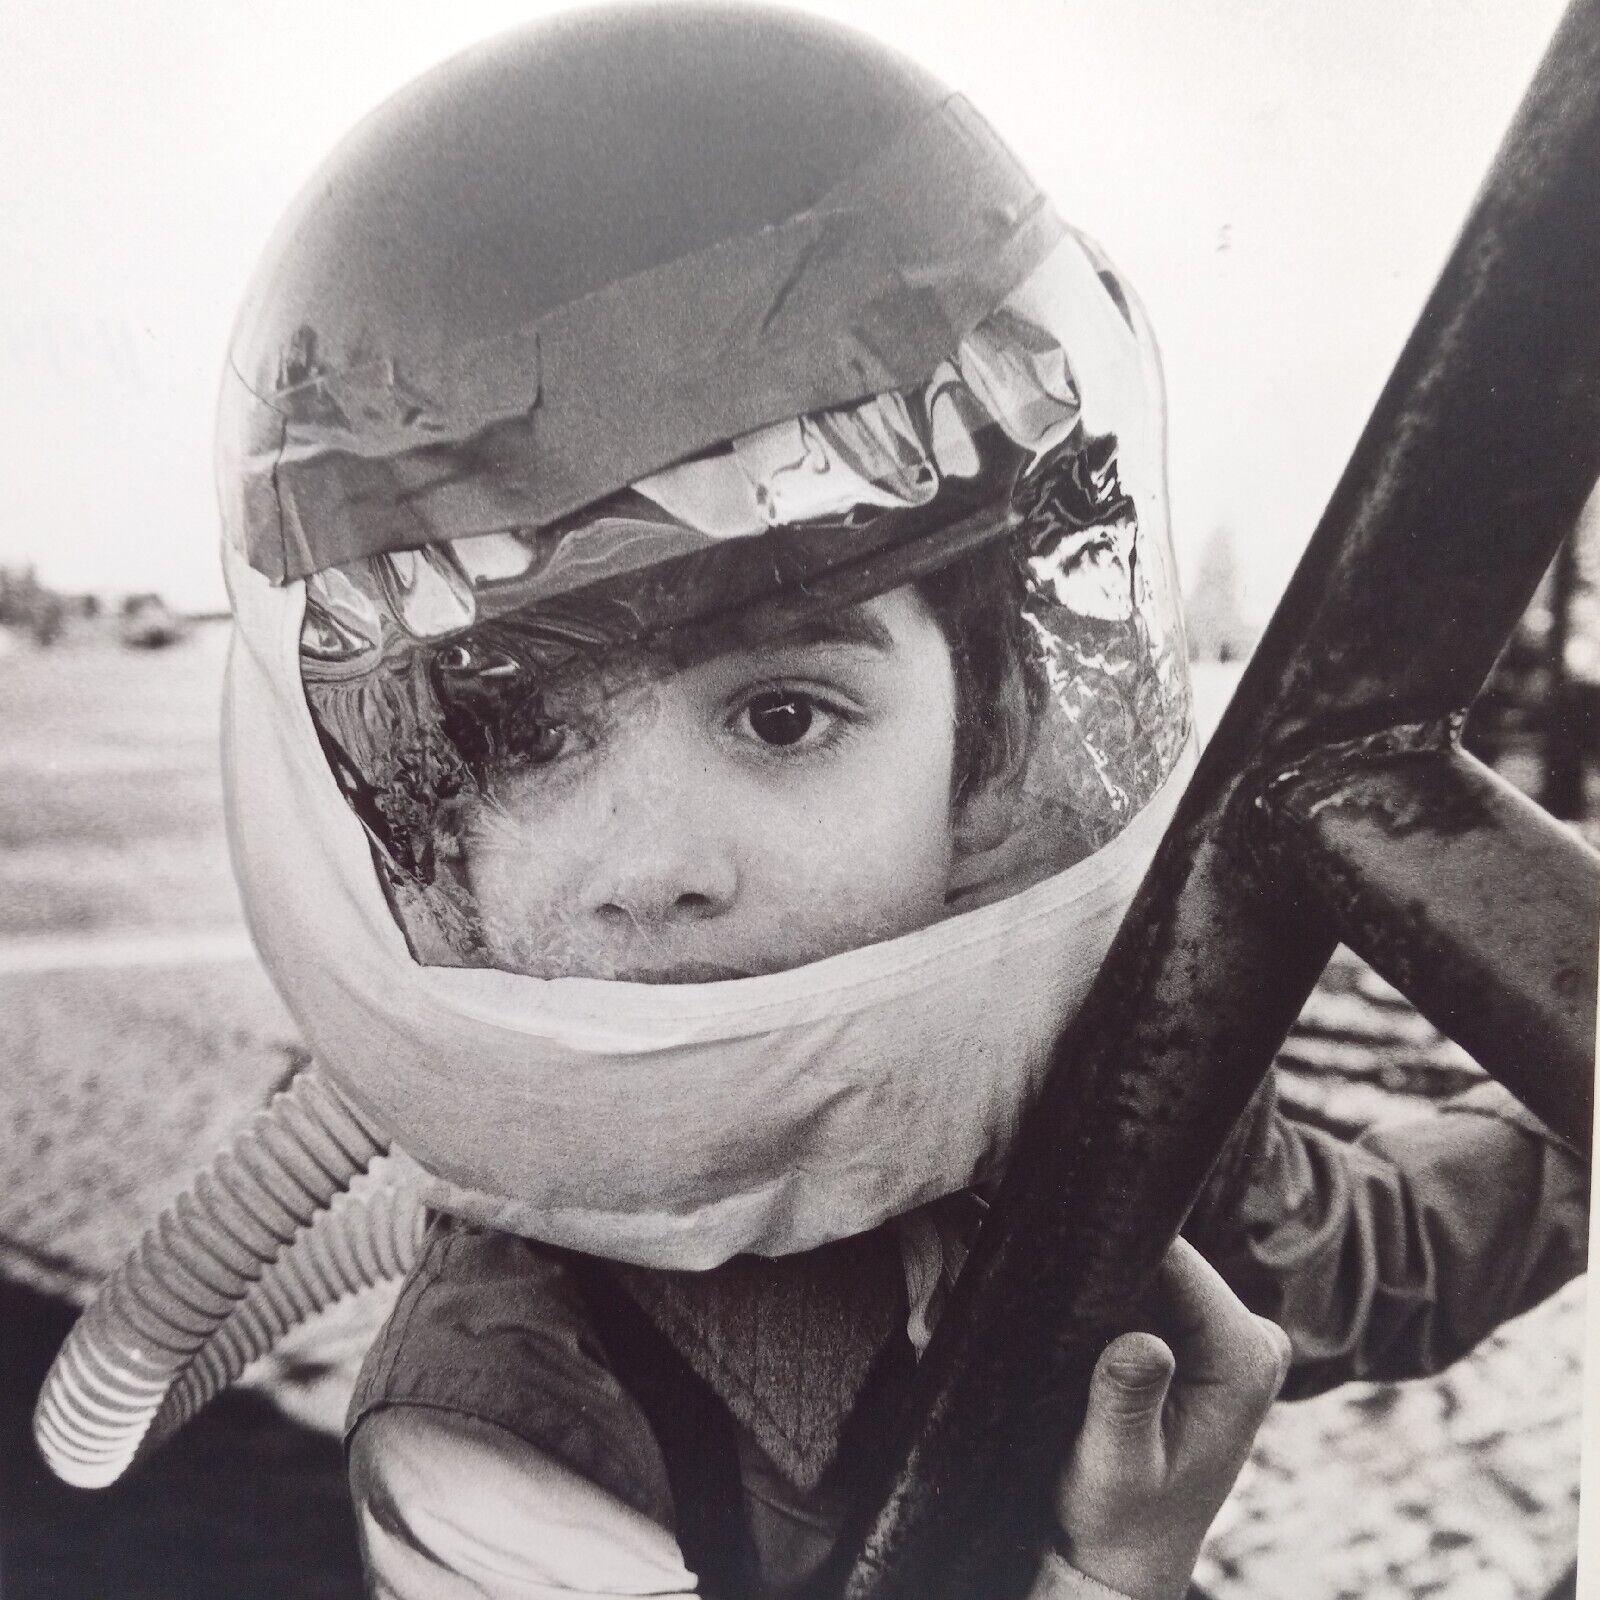 Vintage Press Photo Adorable Boy Odd Helmet Suit Costume Strange Art Snapshot